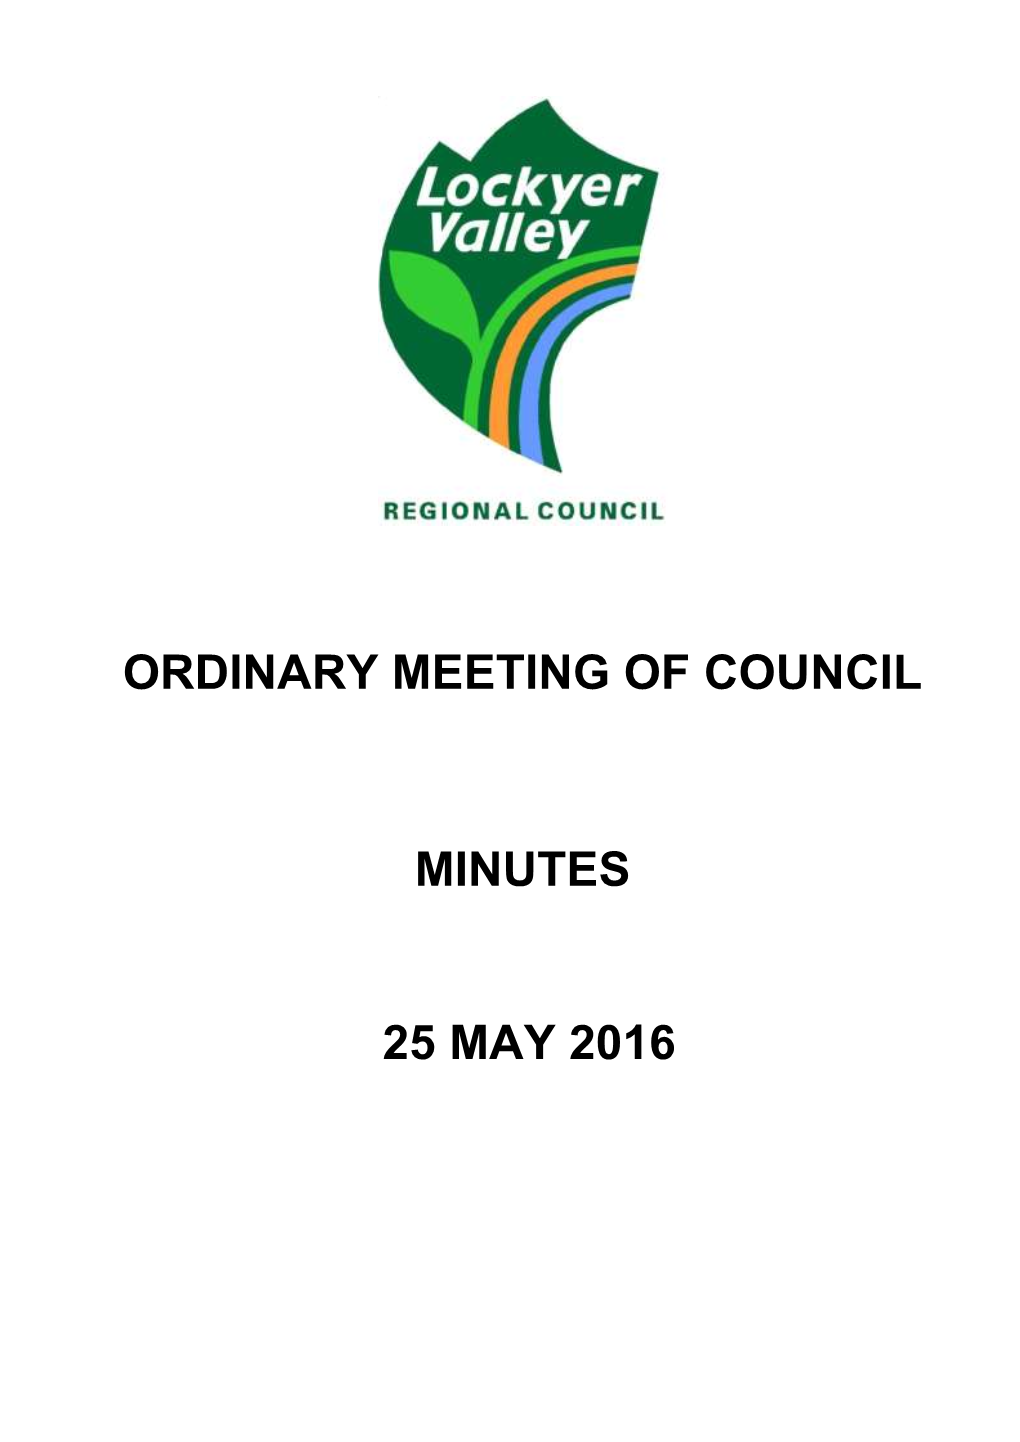 Ordinary Meeting of Council Minutes 25 May 2016